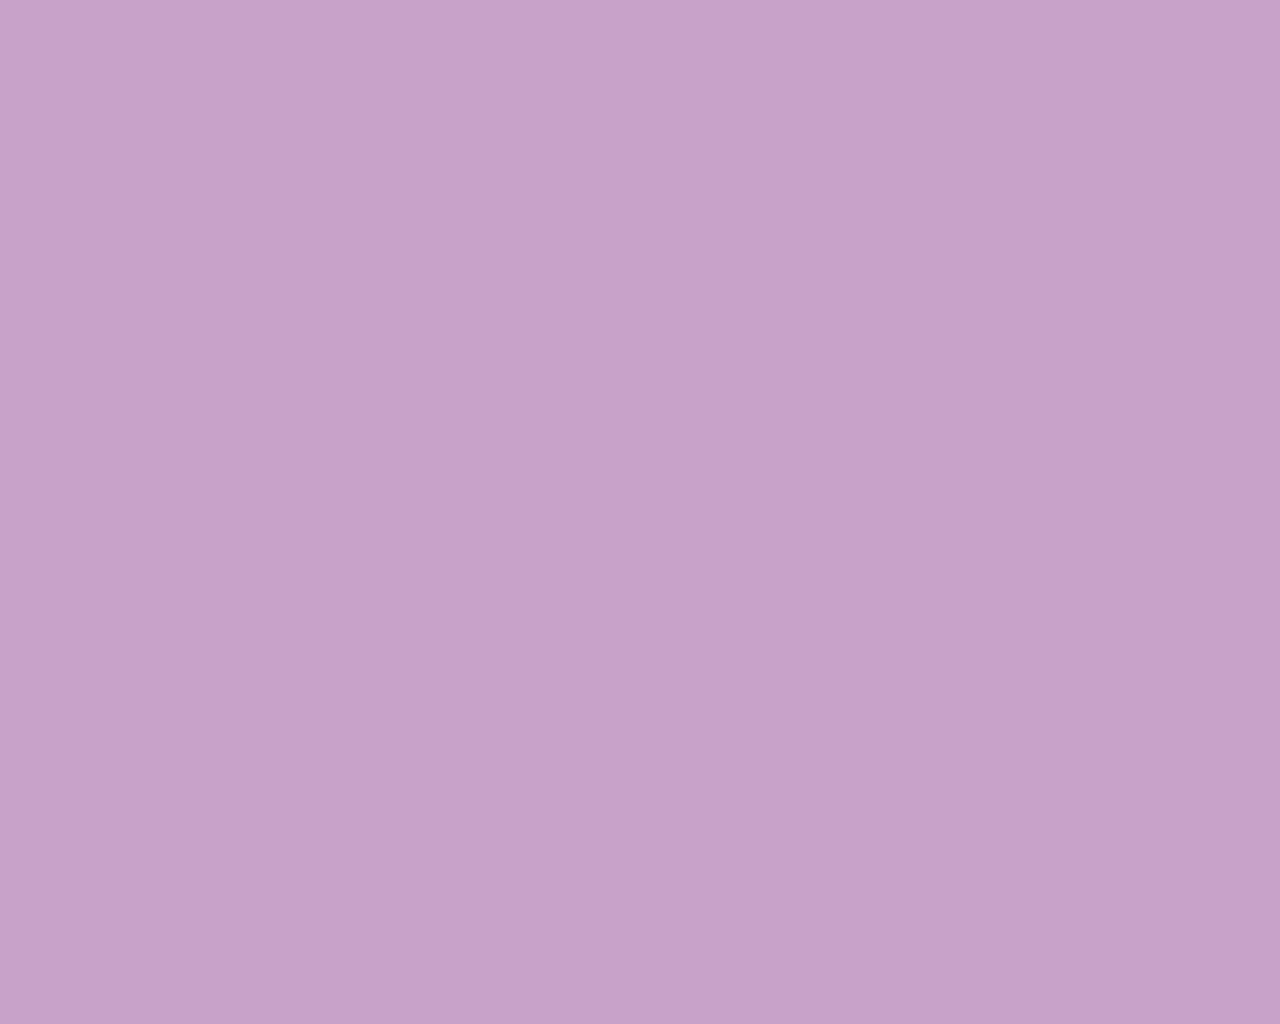 Defocused Lilac Background